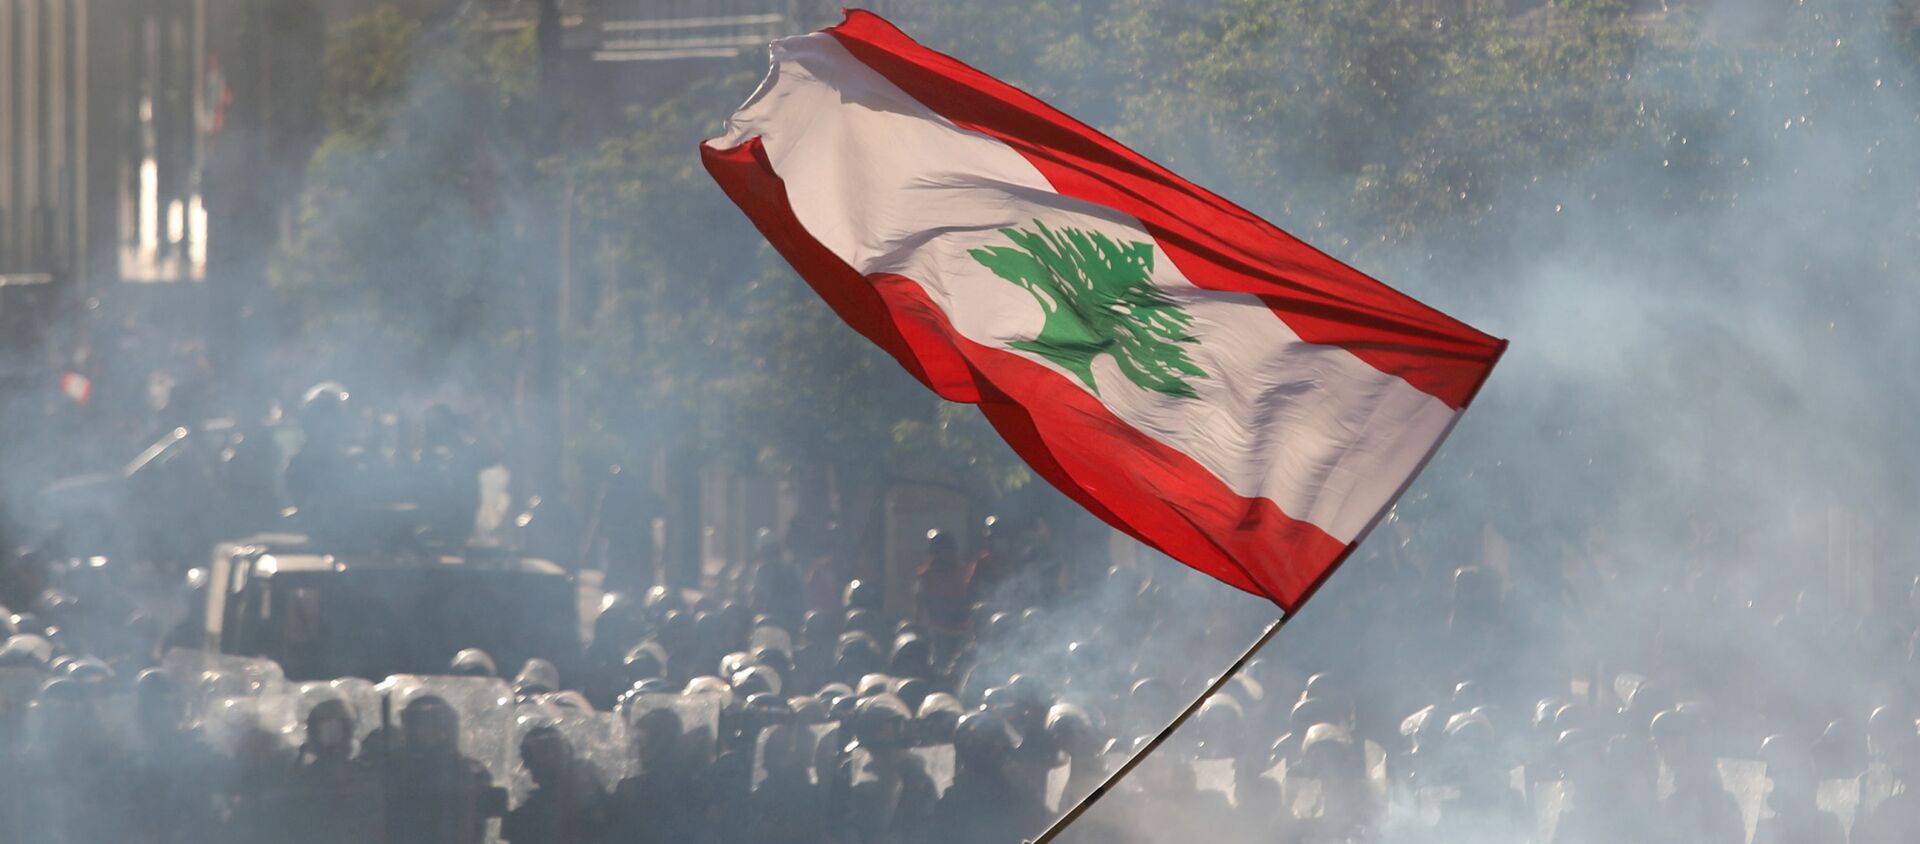 A demonstrator waves the Lebanese flag in front of riot police - Sputnik International, 1920, 30.09.2020